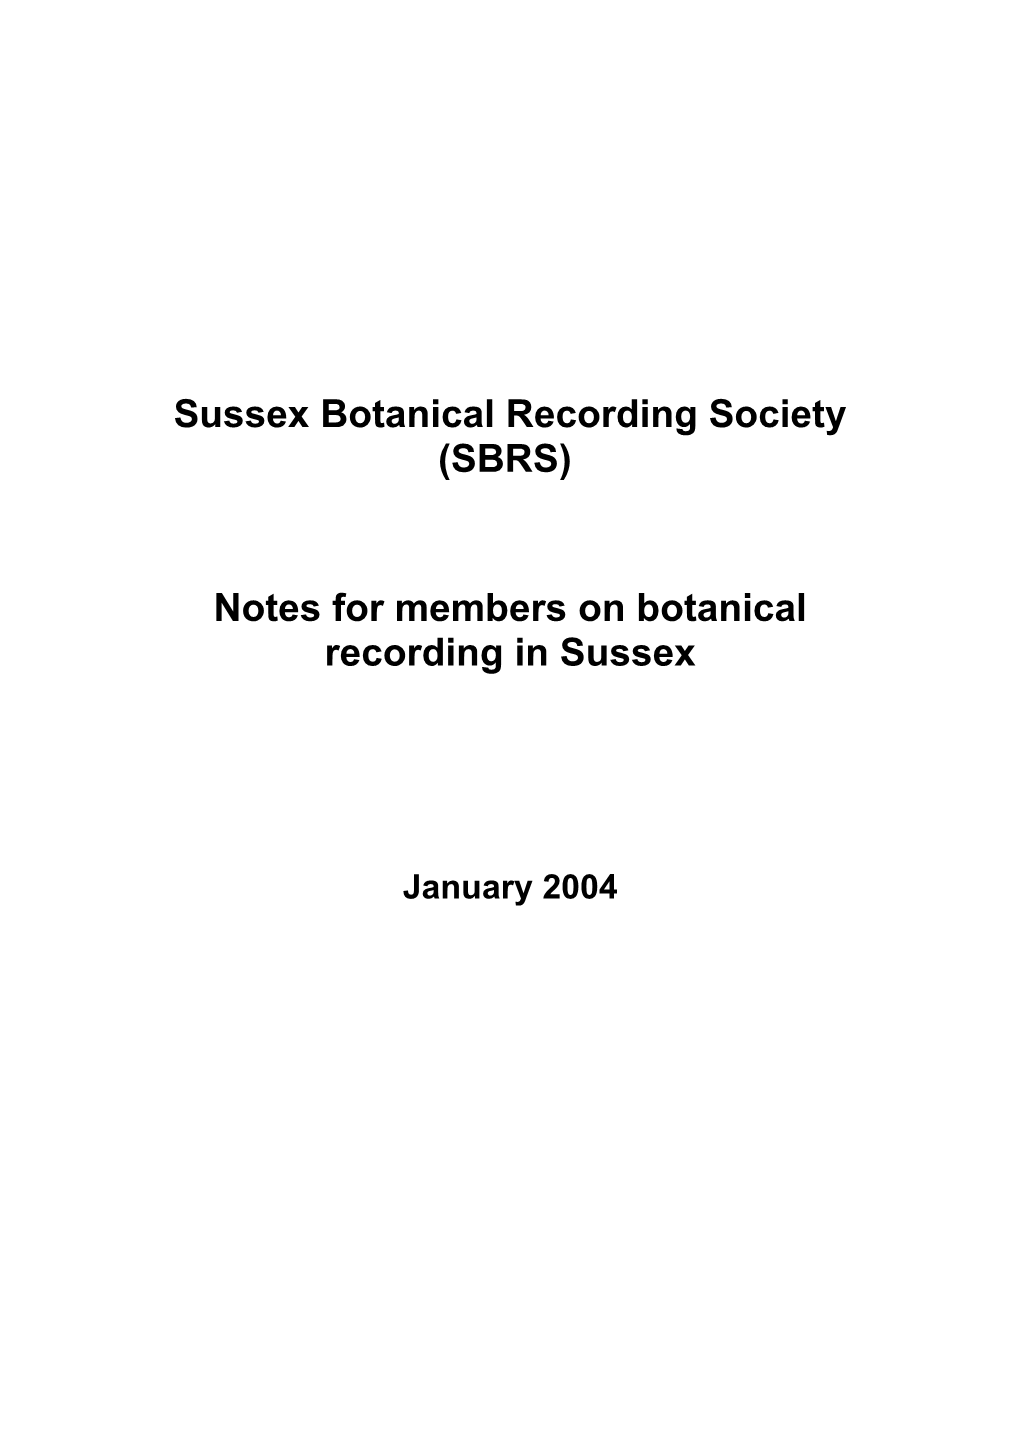 Sussex Botanical Recording Society (SBRS)